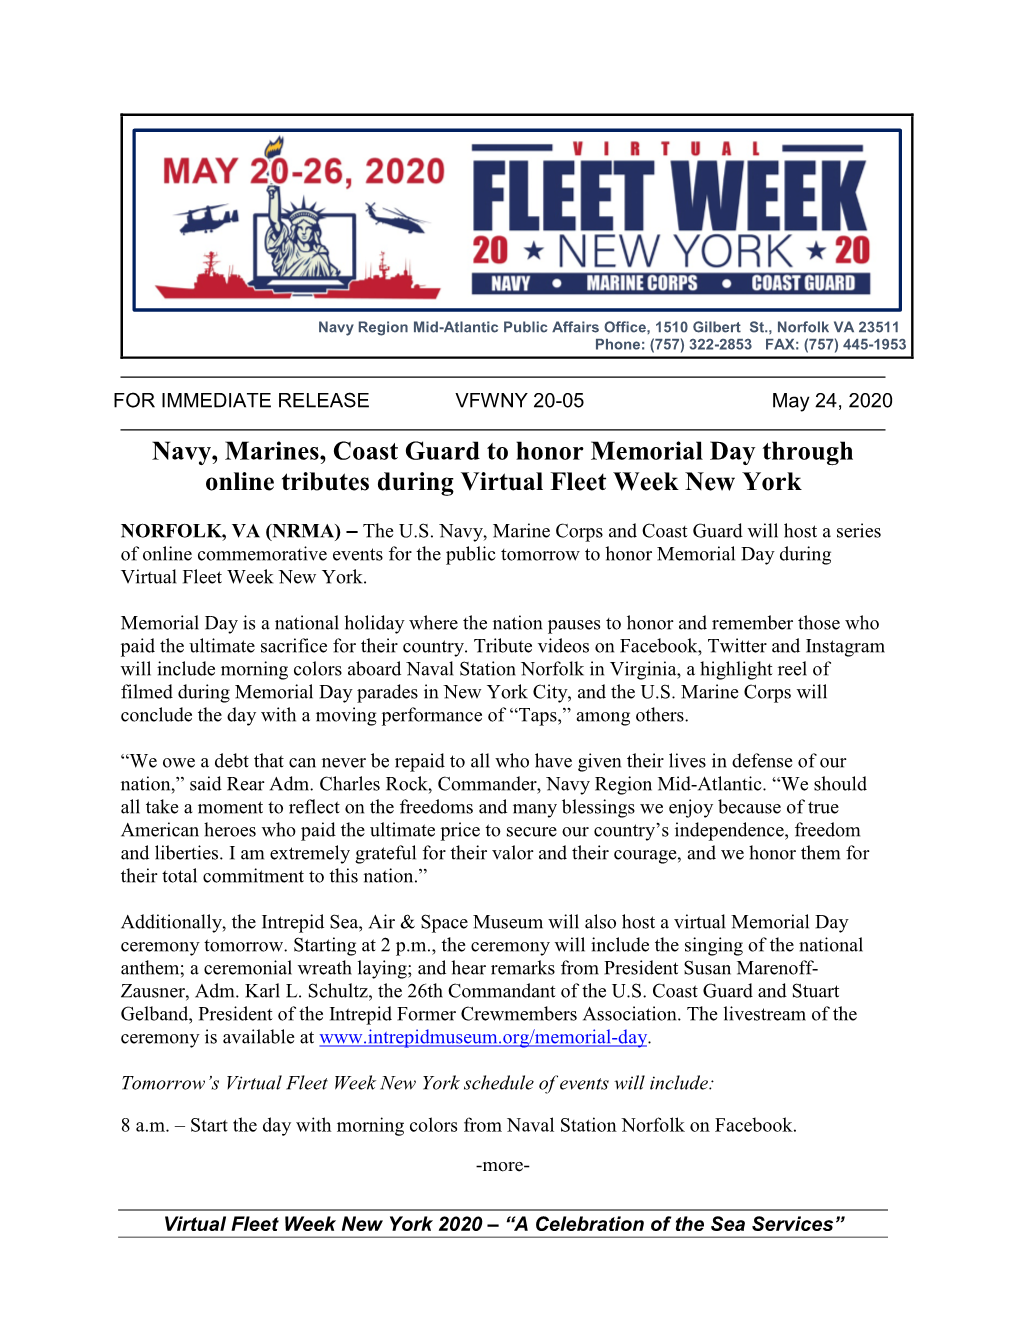 Navy, Marines, Coast Guard to Honor Memorial Day Through Online Tributes During Virtual Fleet Week New York